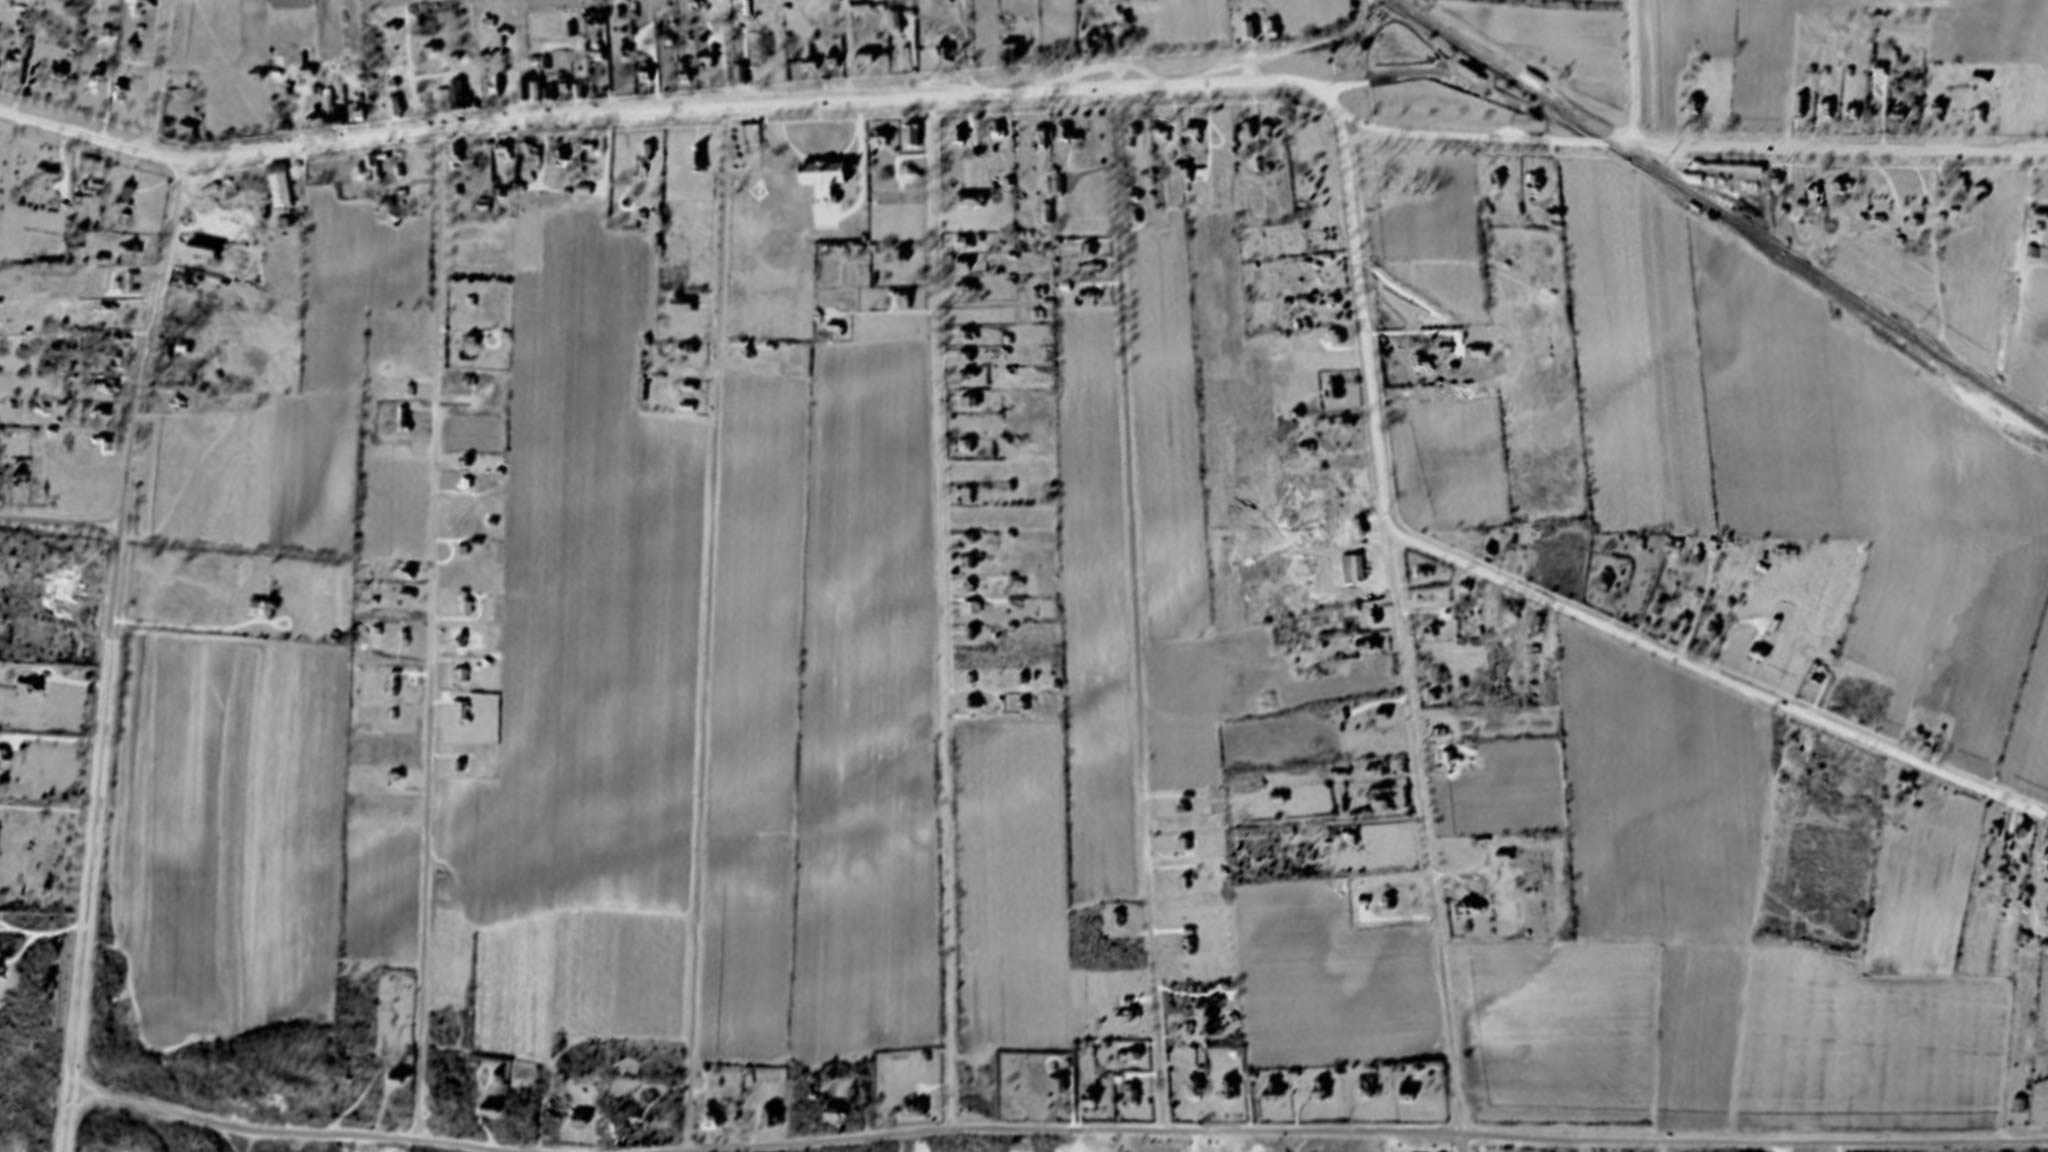 Hamptons, NY satellite image from 1954